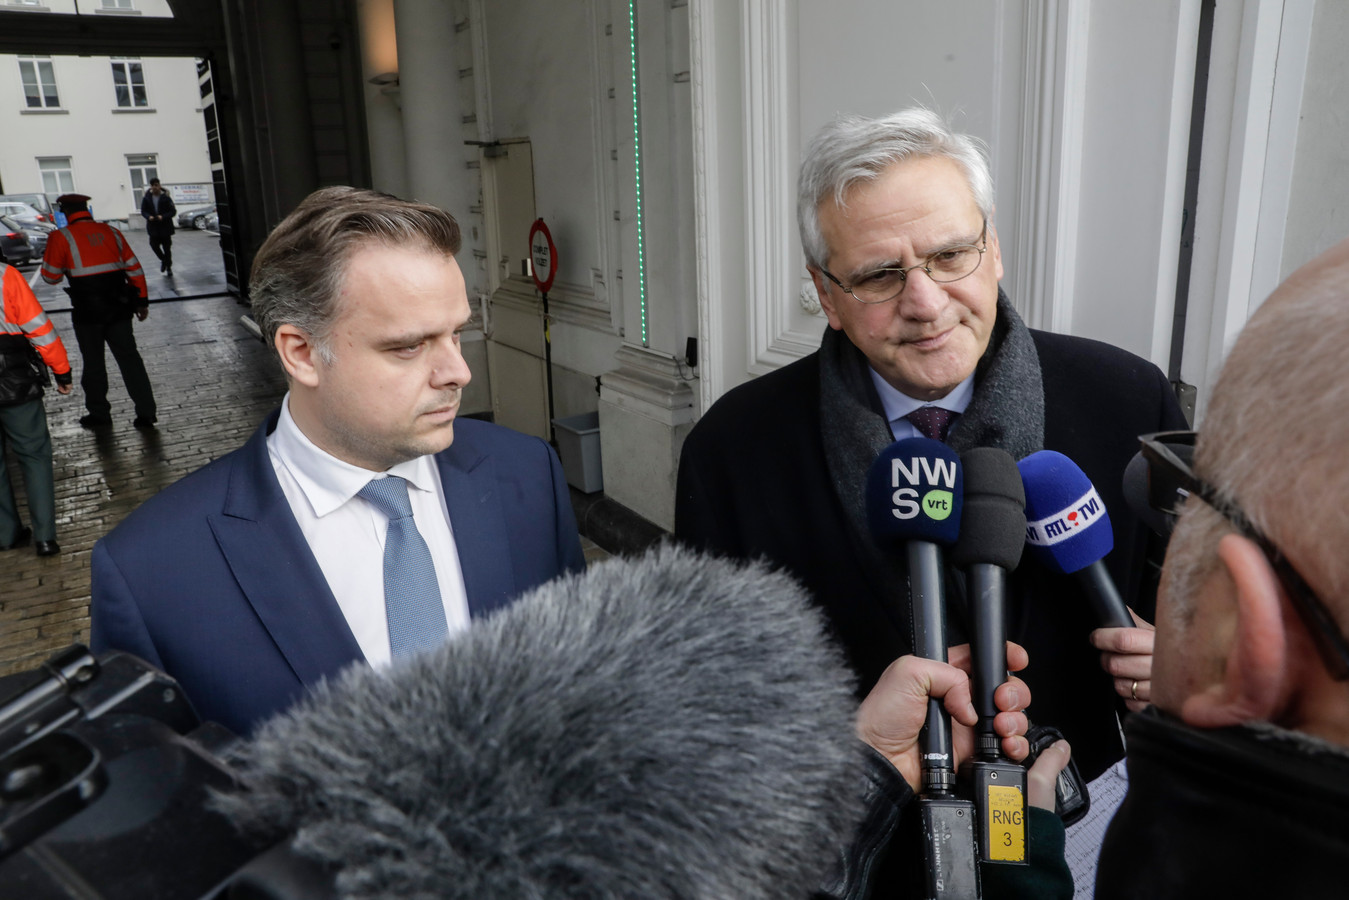 CD&V-vicepremier en minister van Werk Kris Peeters (R) en minister van Telecom Philippe De Backer (Open Vld) spreken de pers toe na het overleg.